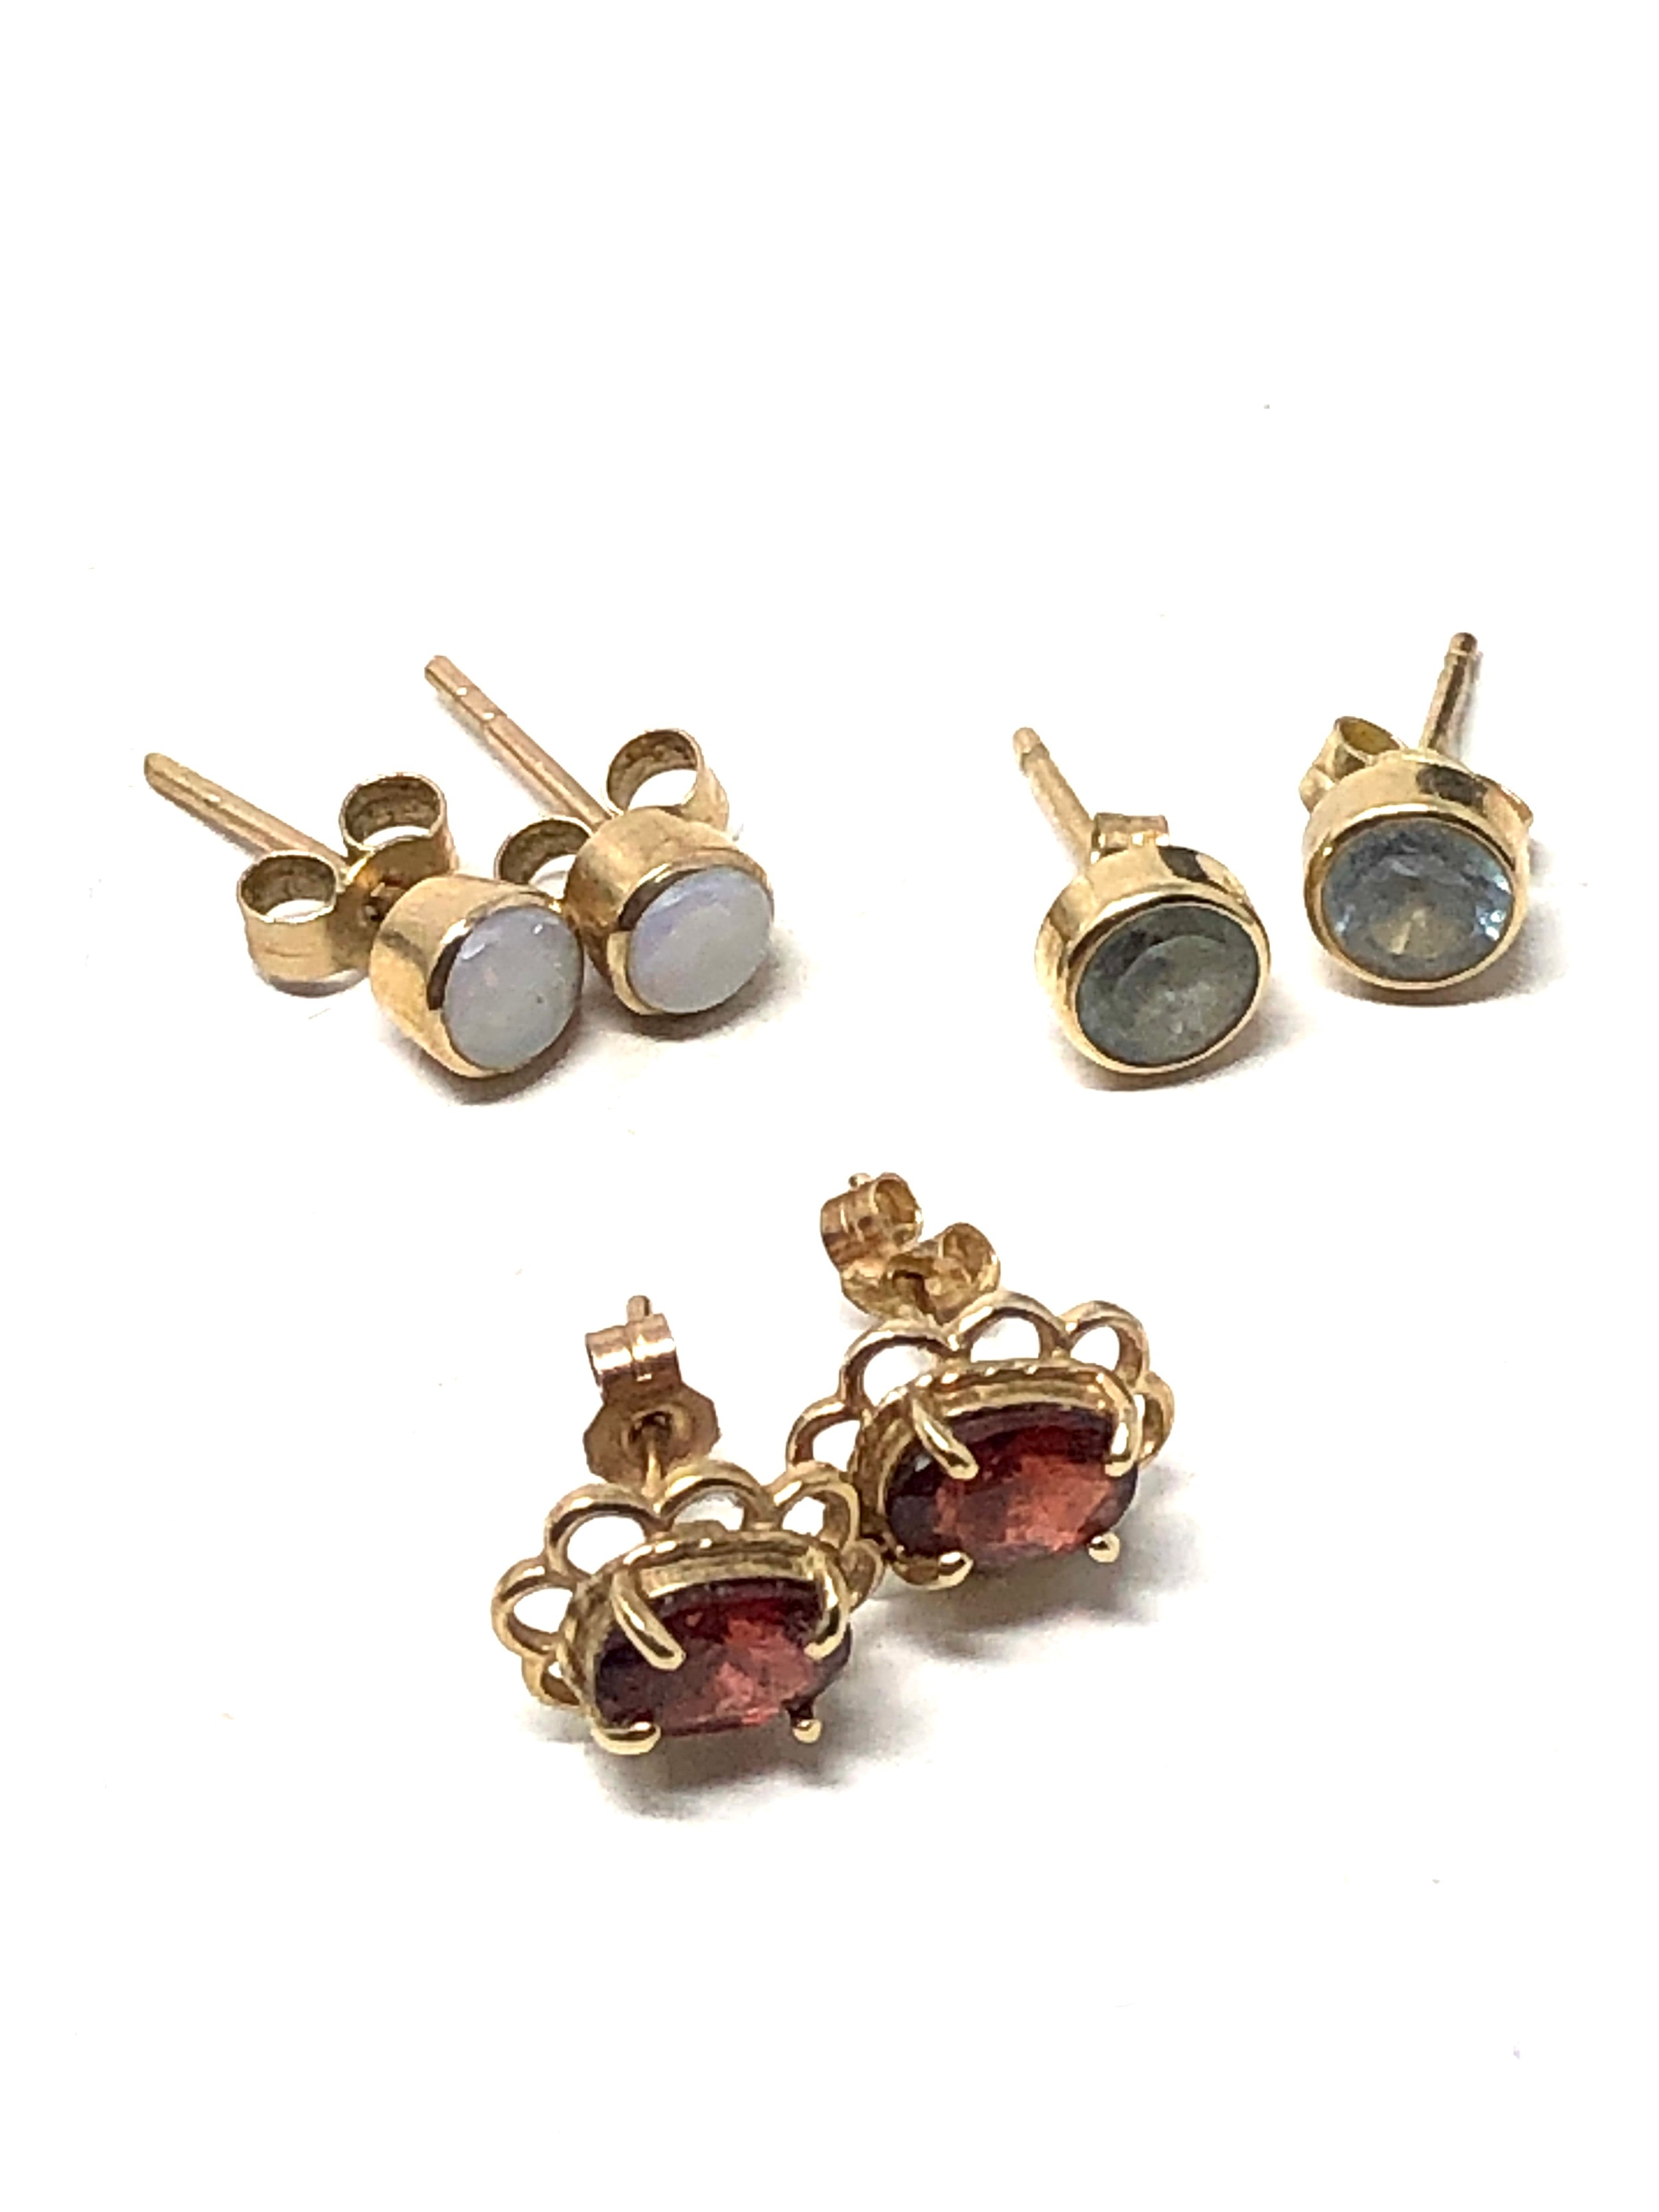 3 x 9ct gold paired gemstone stud earrings inc. topaz, garnet & opal (2.3g)